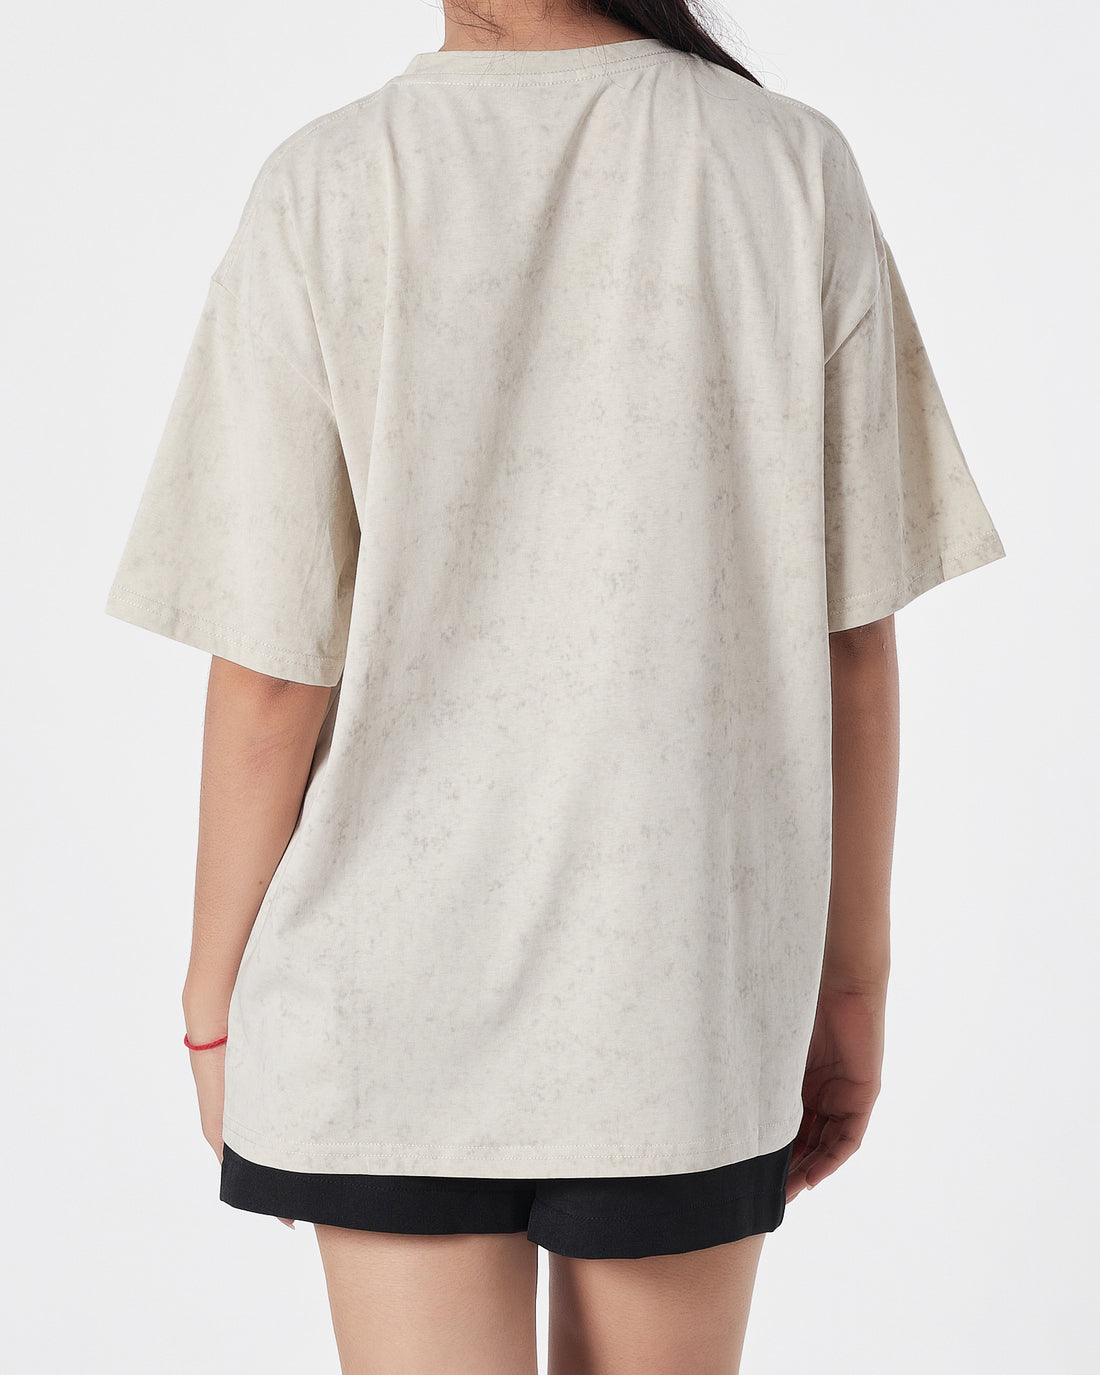 Unisex Over Size Cream T-Shirt 13.90